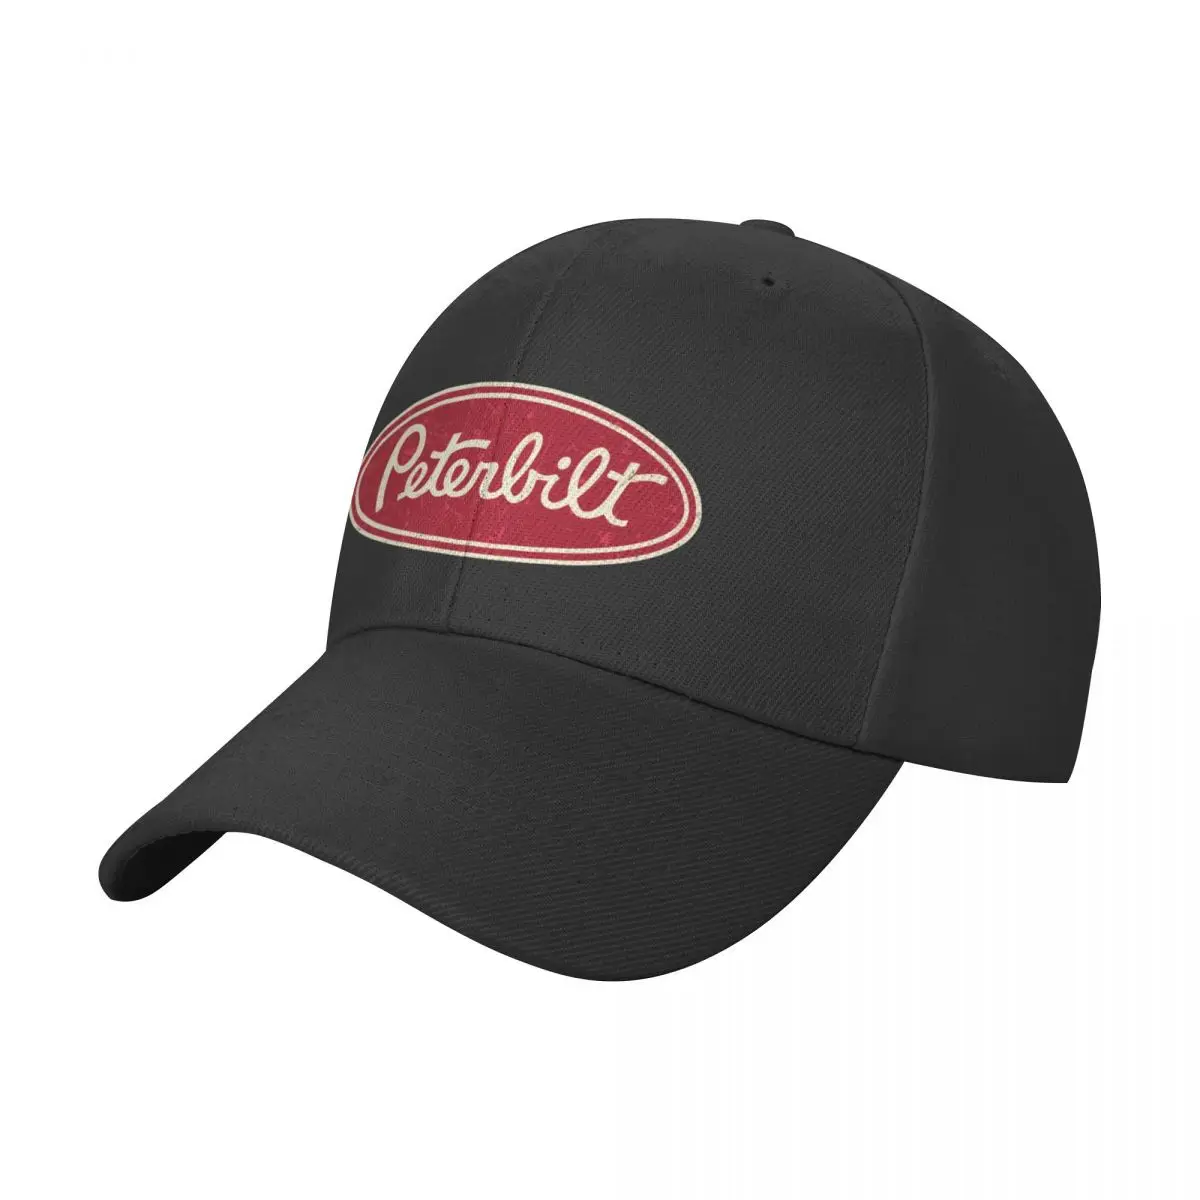 

Peterbilt Truck Racing Vintage Baseball Cap Sunhat Sun Hat For Children Cosplay Golf Hat Hat For Women Men's